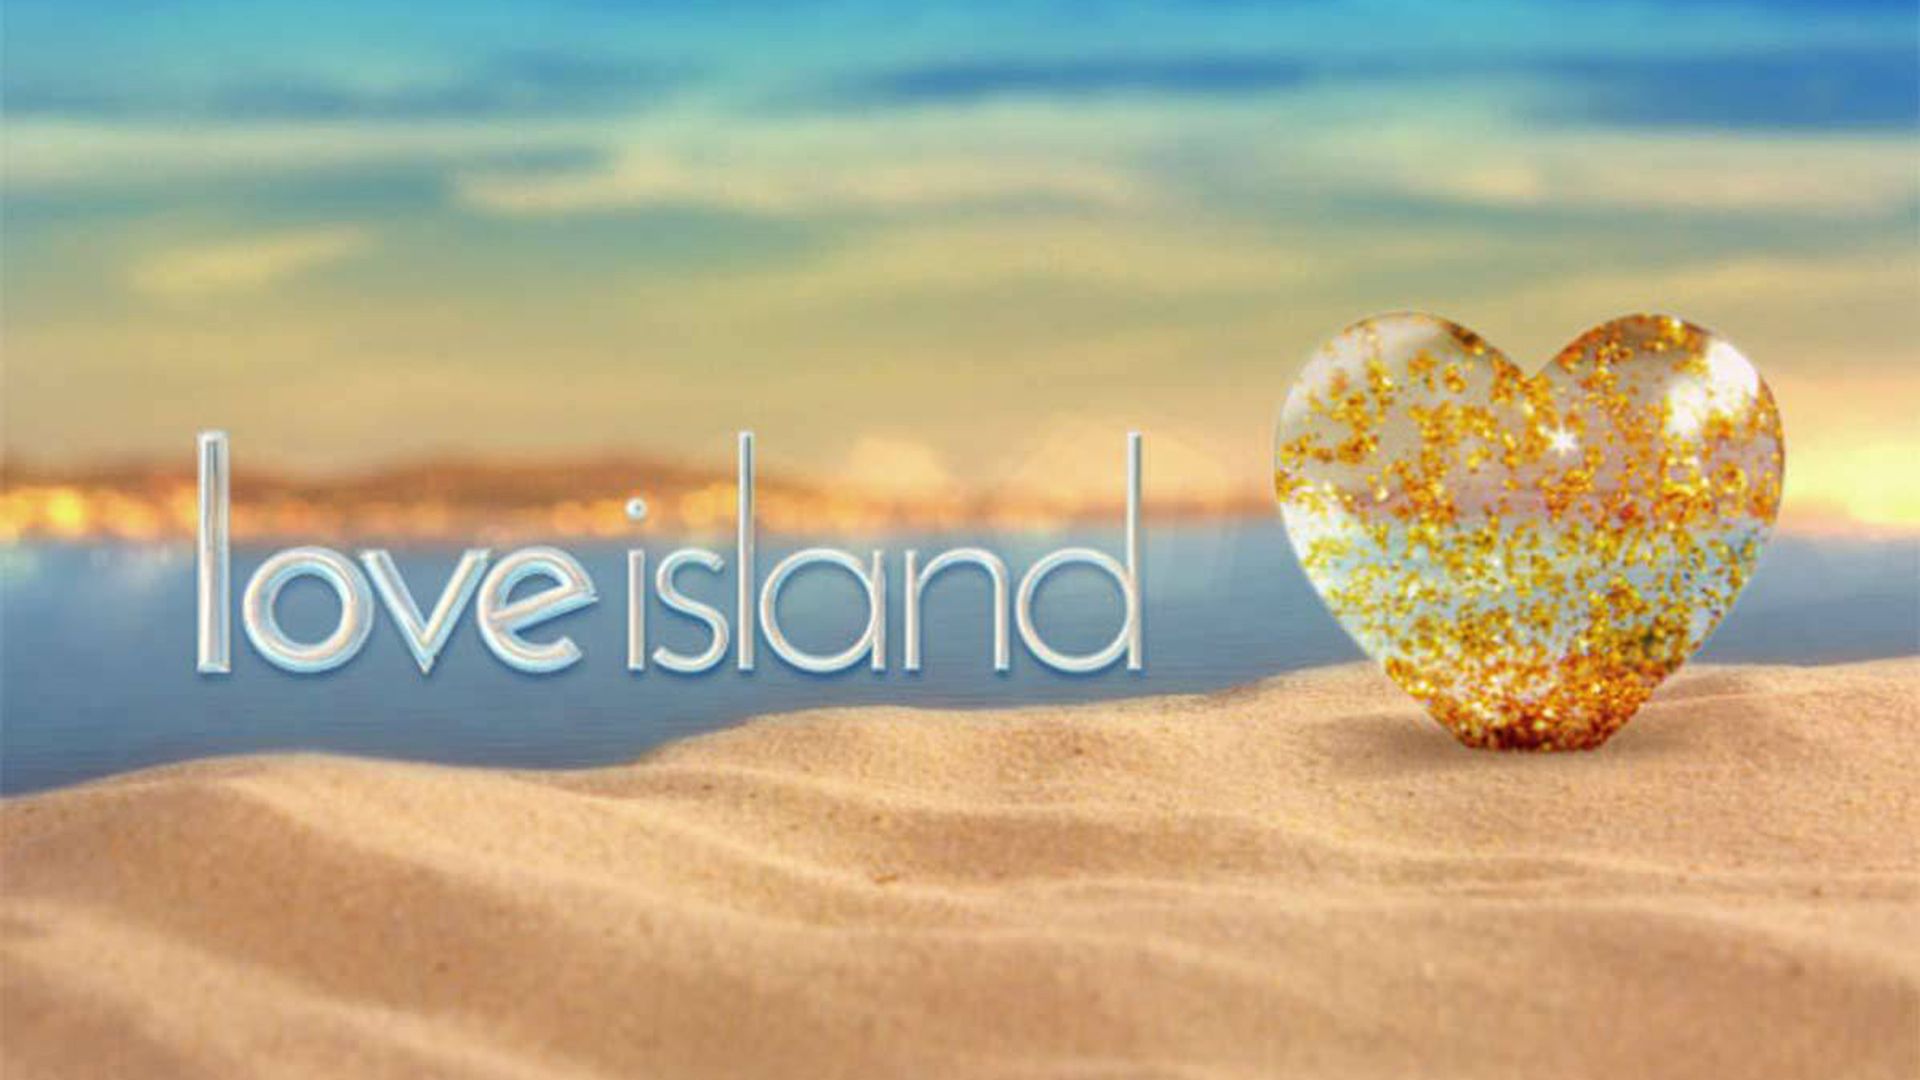 love island returns